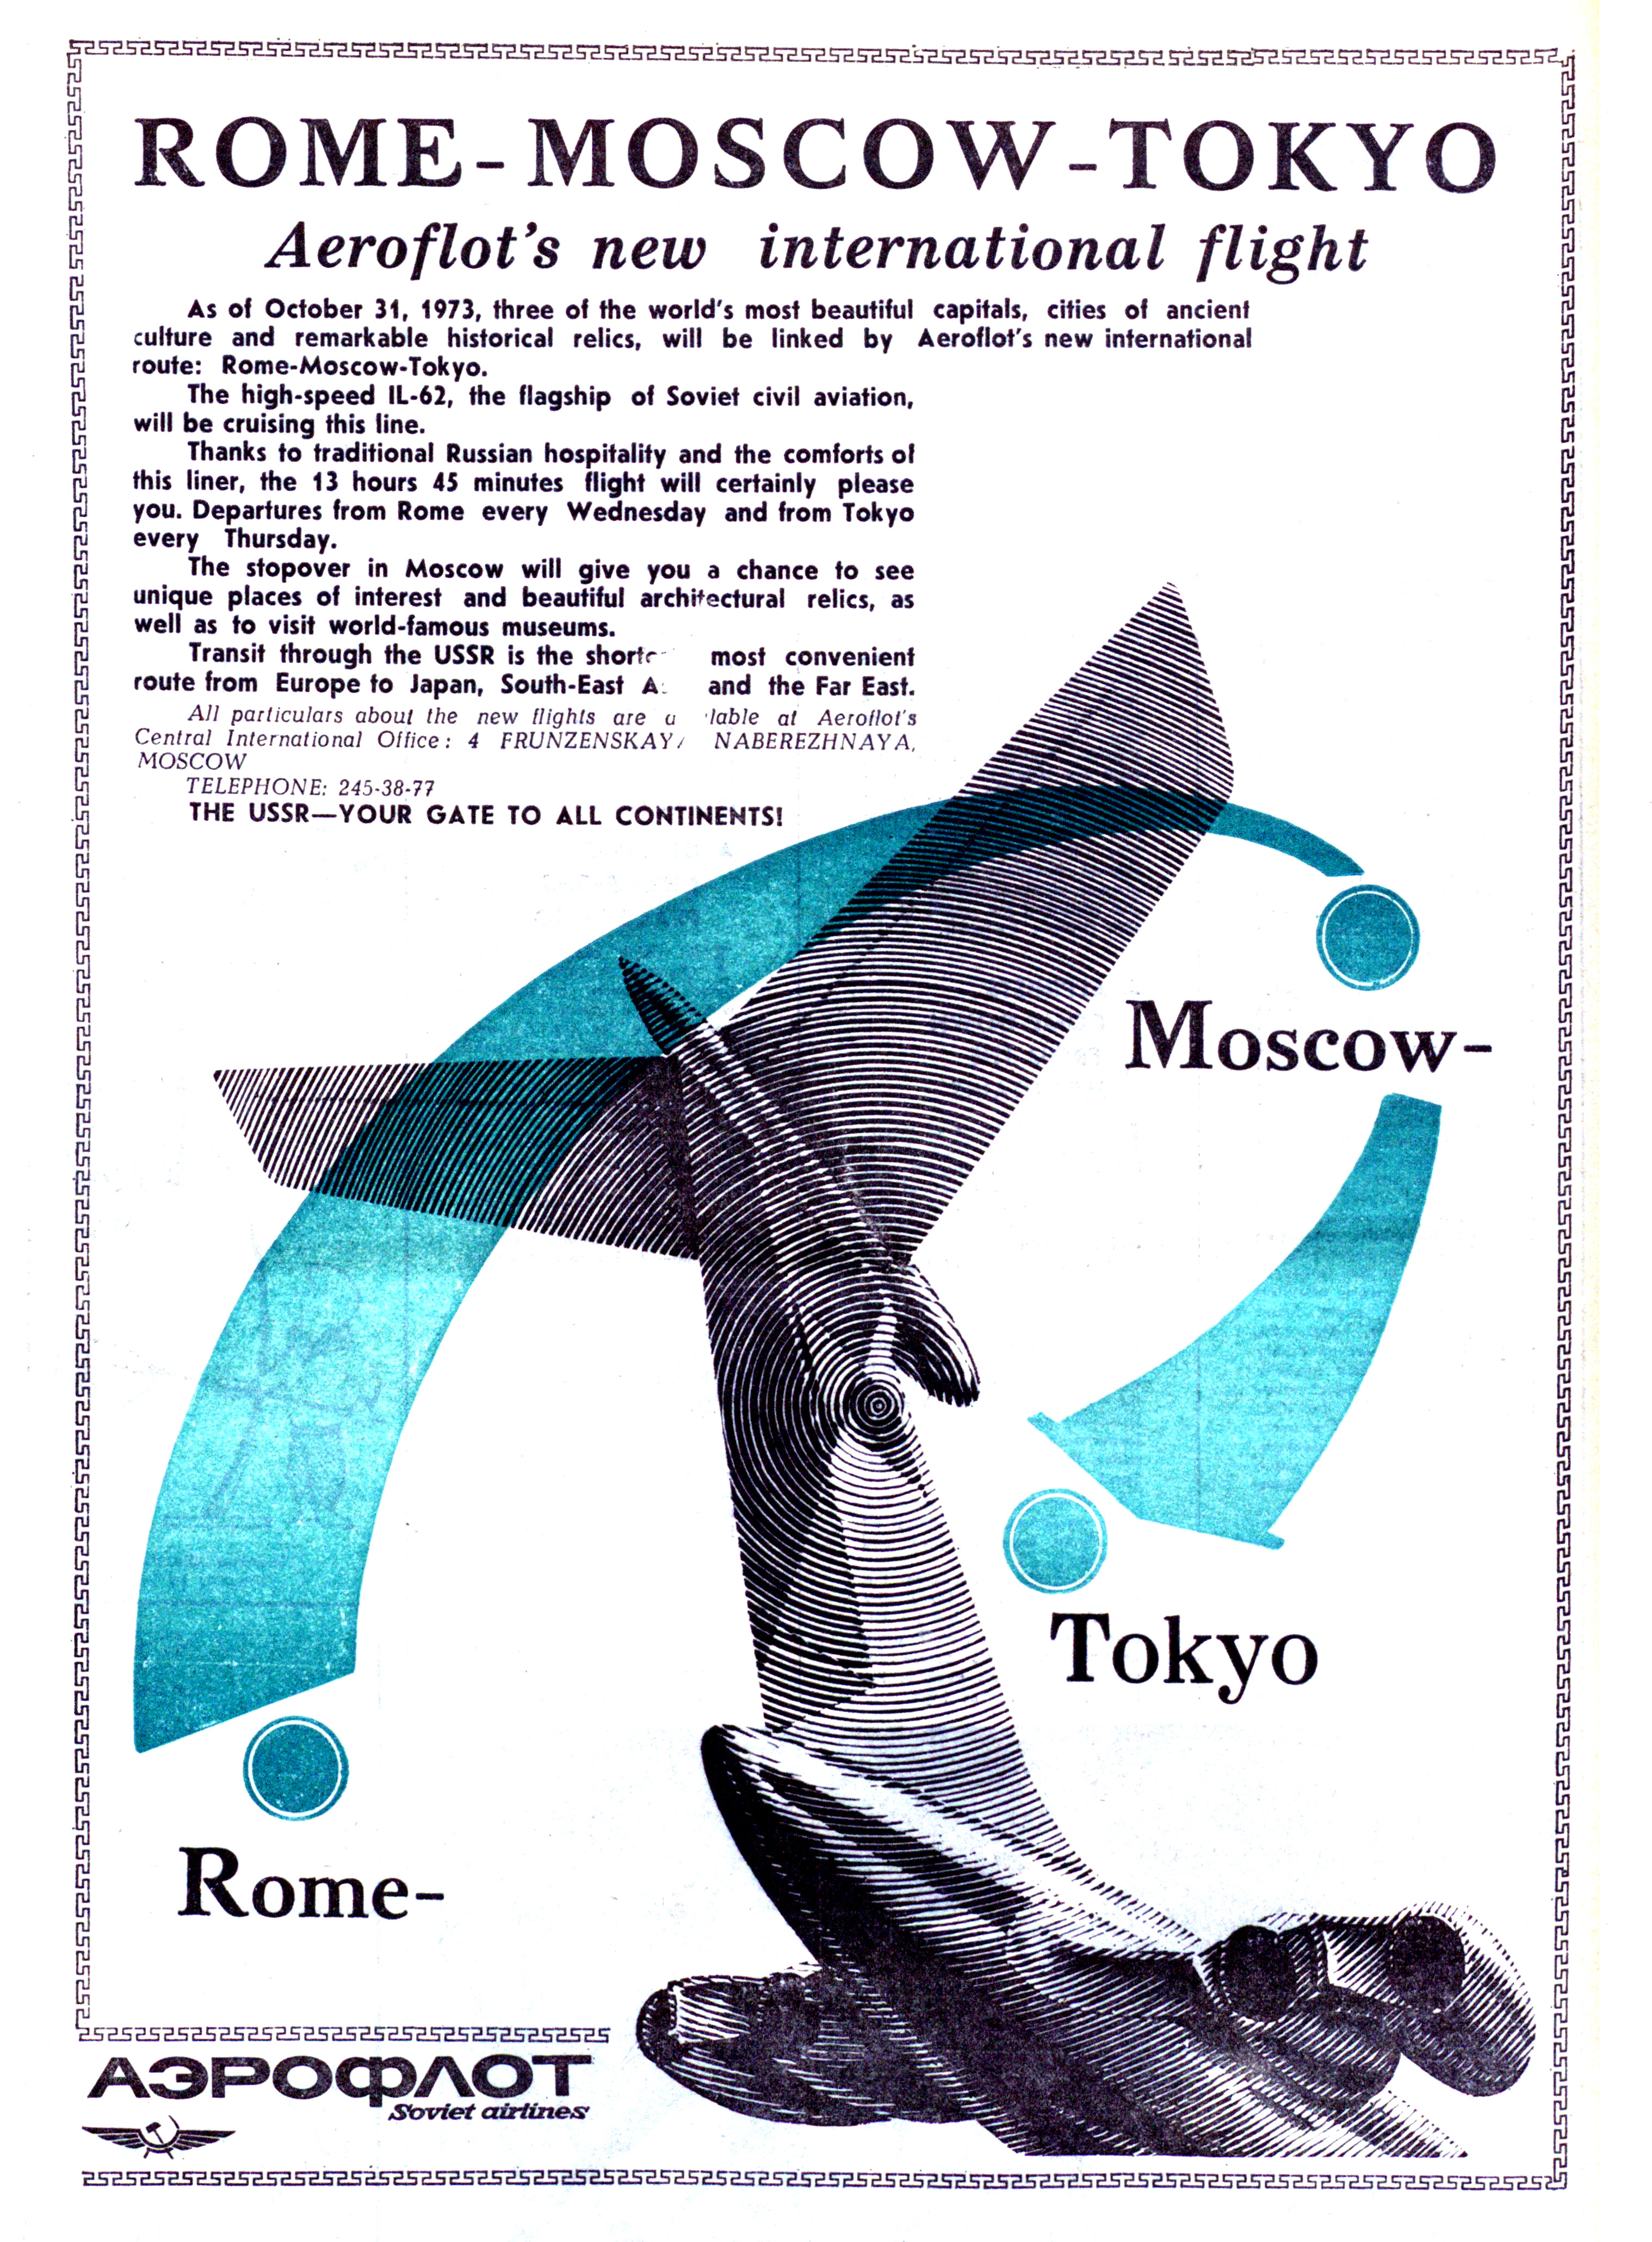 Промолистовка начала полетов по маршруту Рим - Москва - Токио 1973 г.